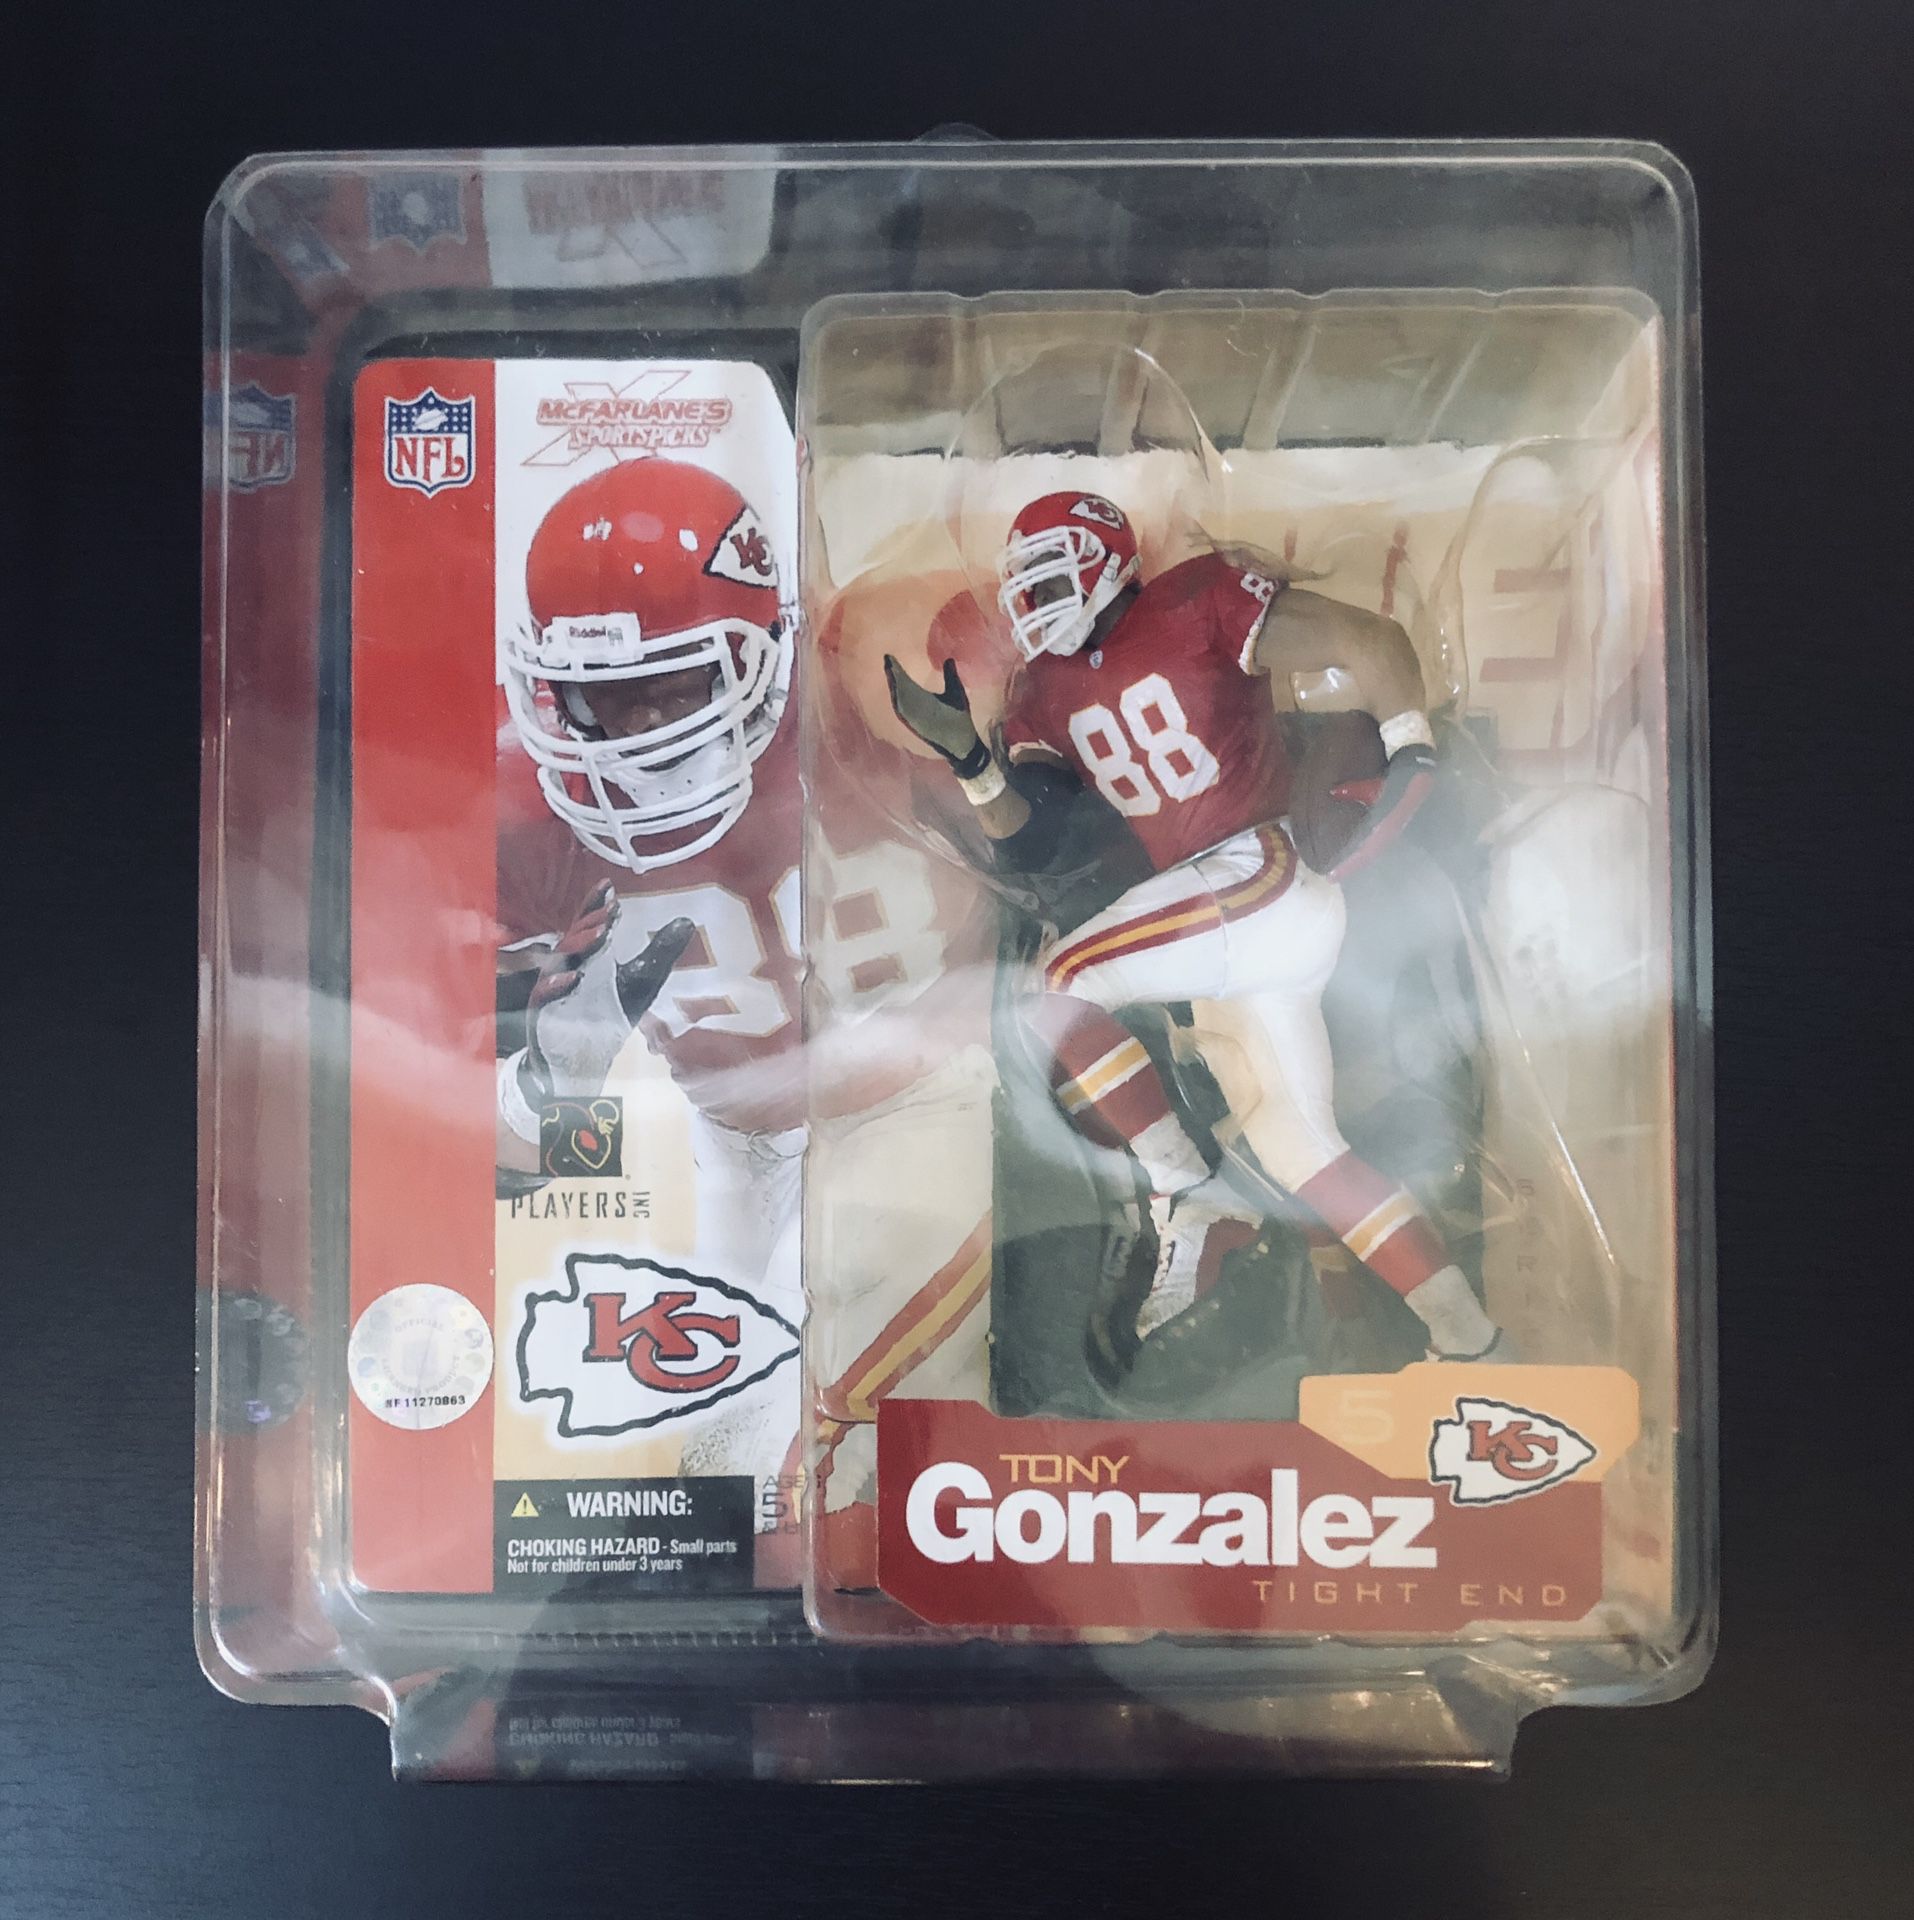 2002 Tony Gonzalez KC Kansas City Chiefs NFL Football McFarlane Action Figure Series 5 - BRAND NEW!